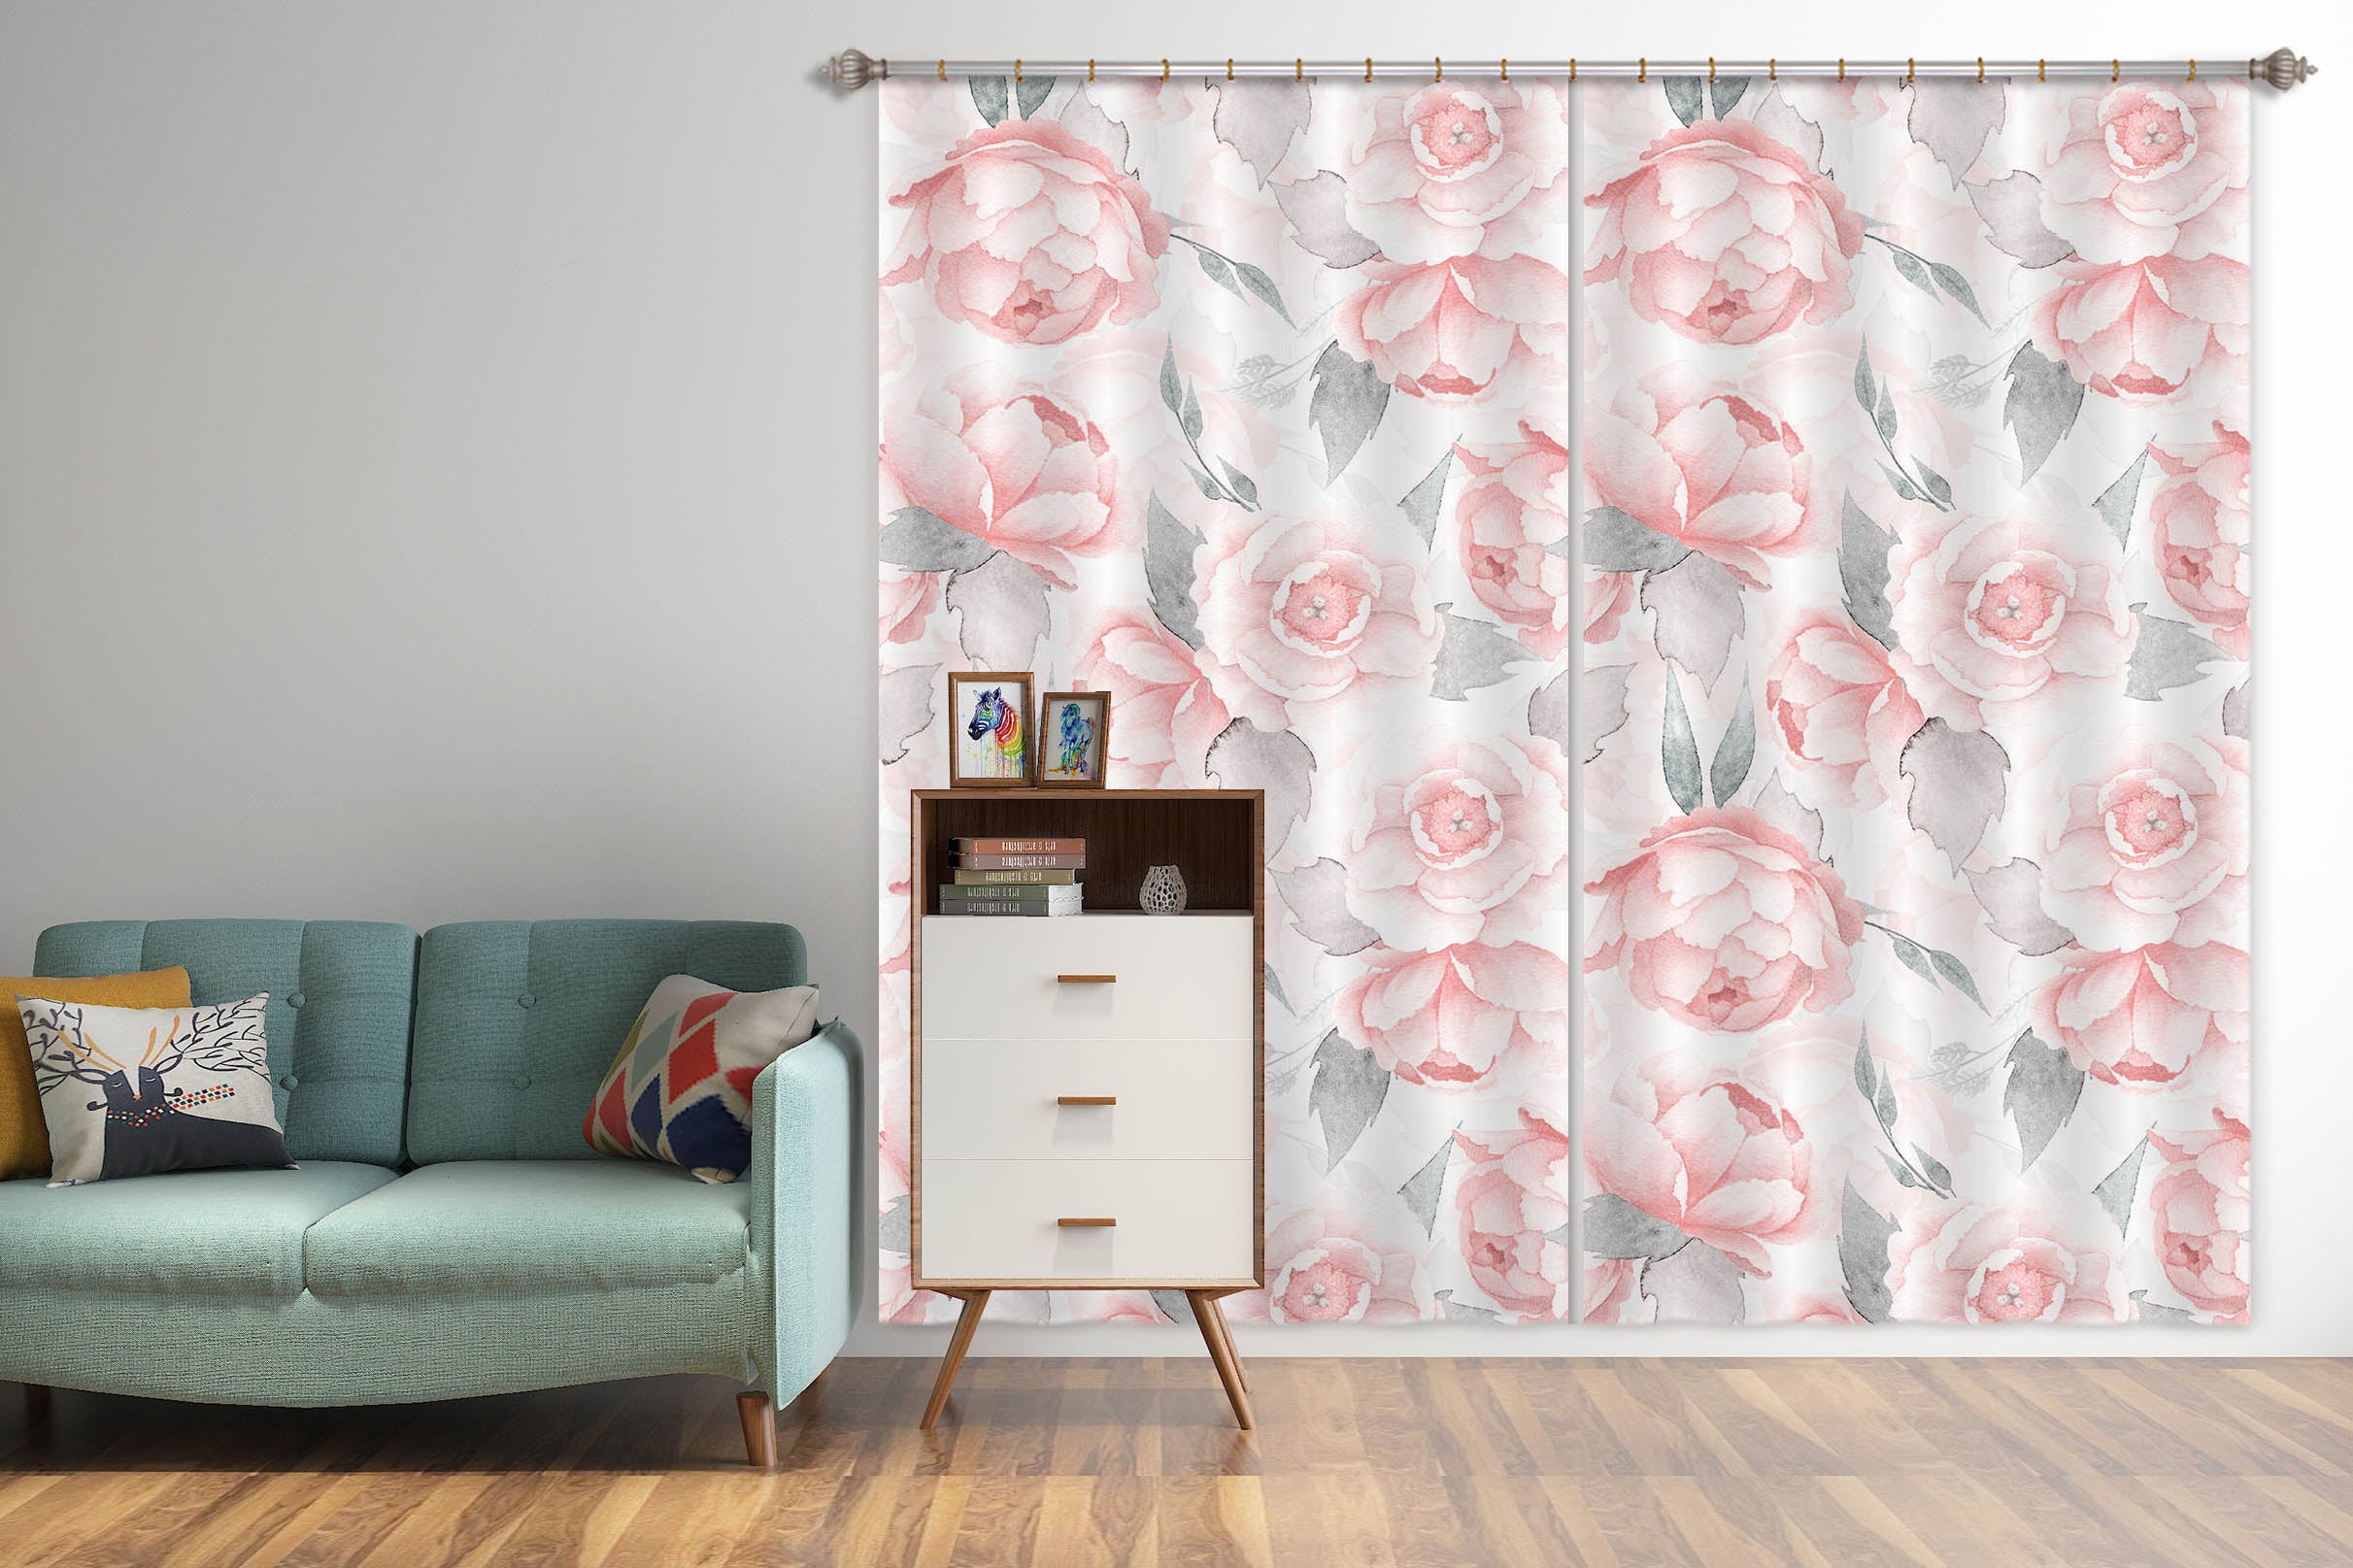 3D Peony Pattern 243 Uta Naumann Curtain Curtains Drapes